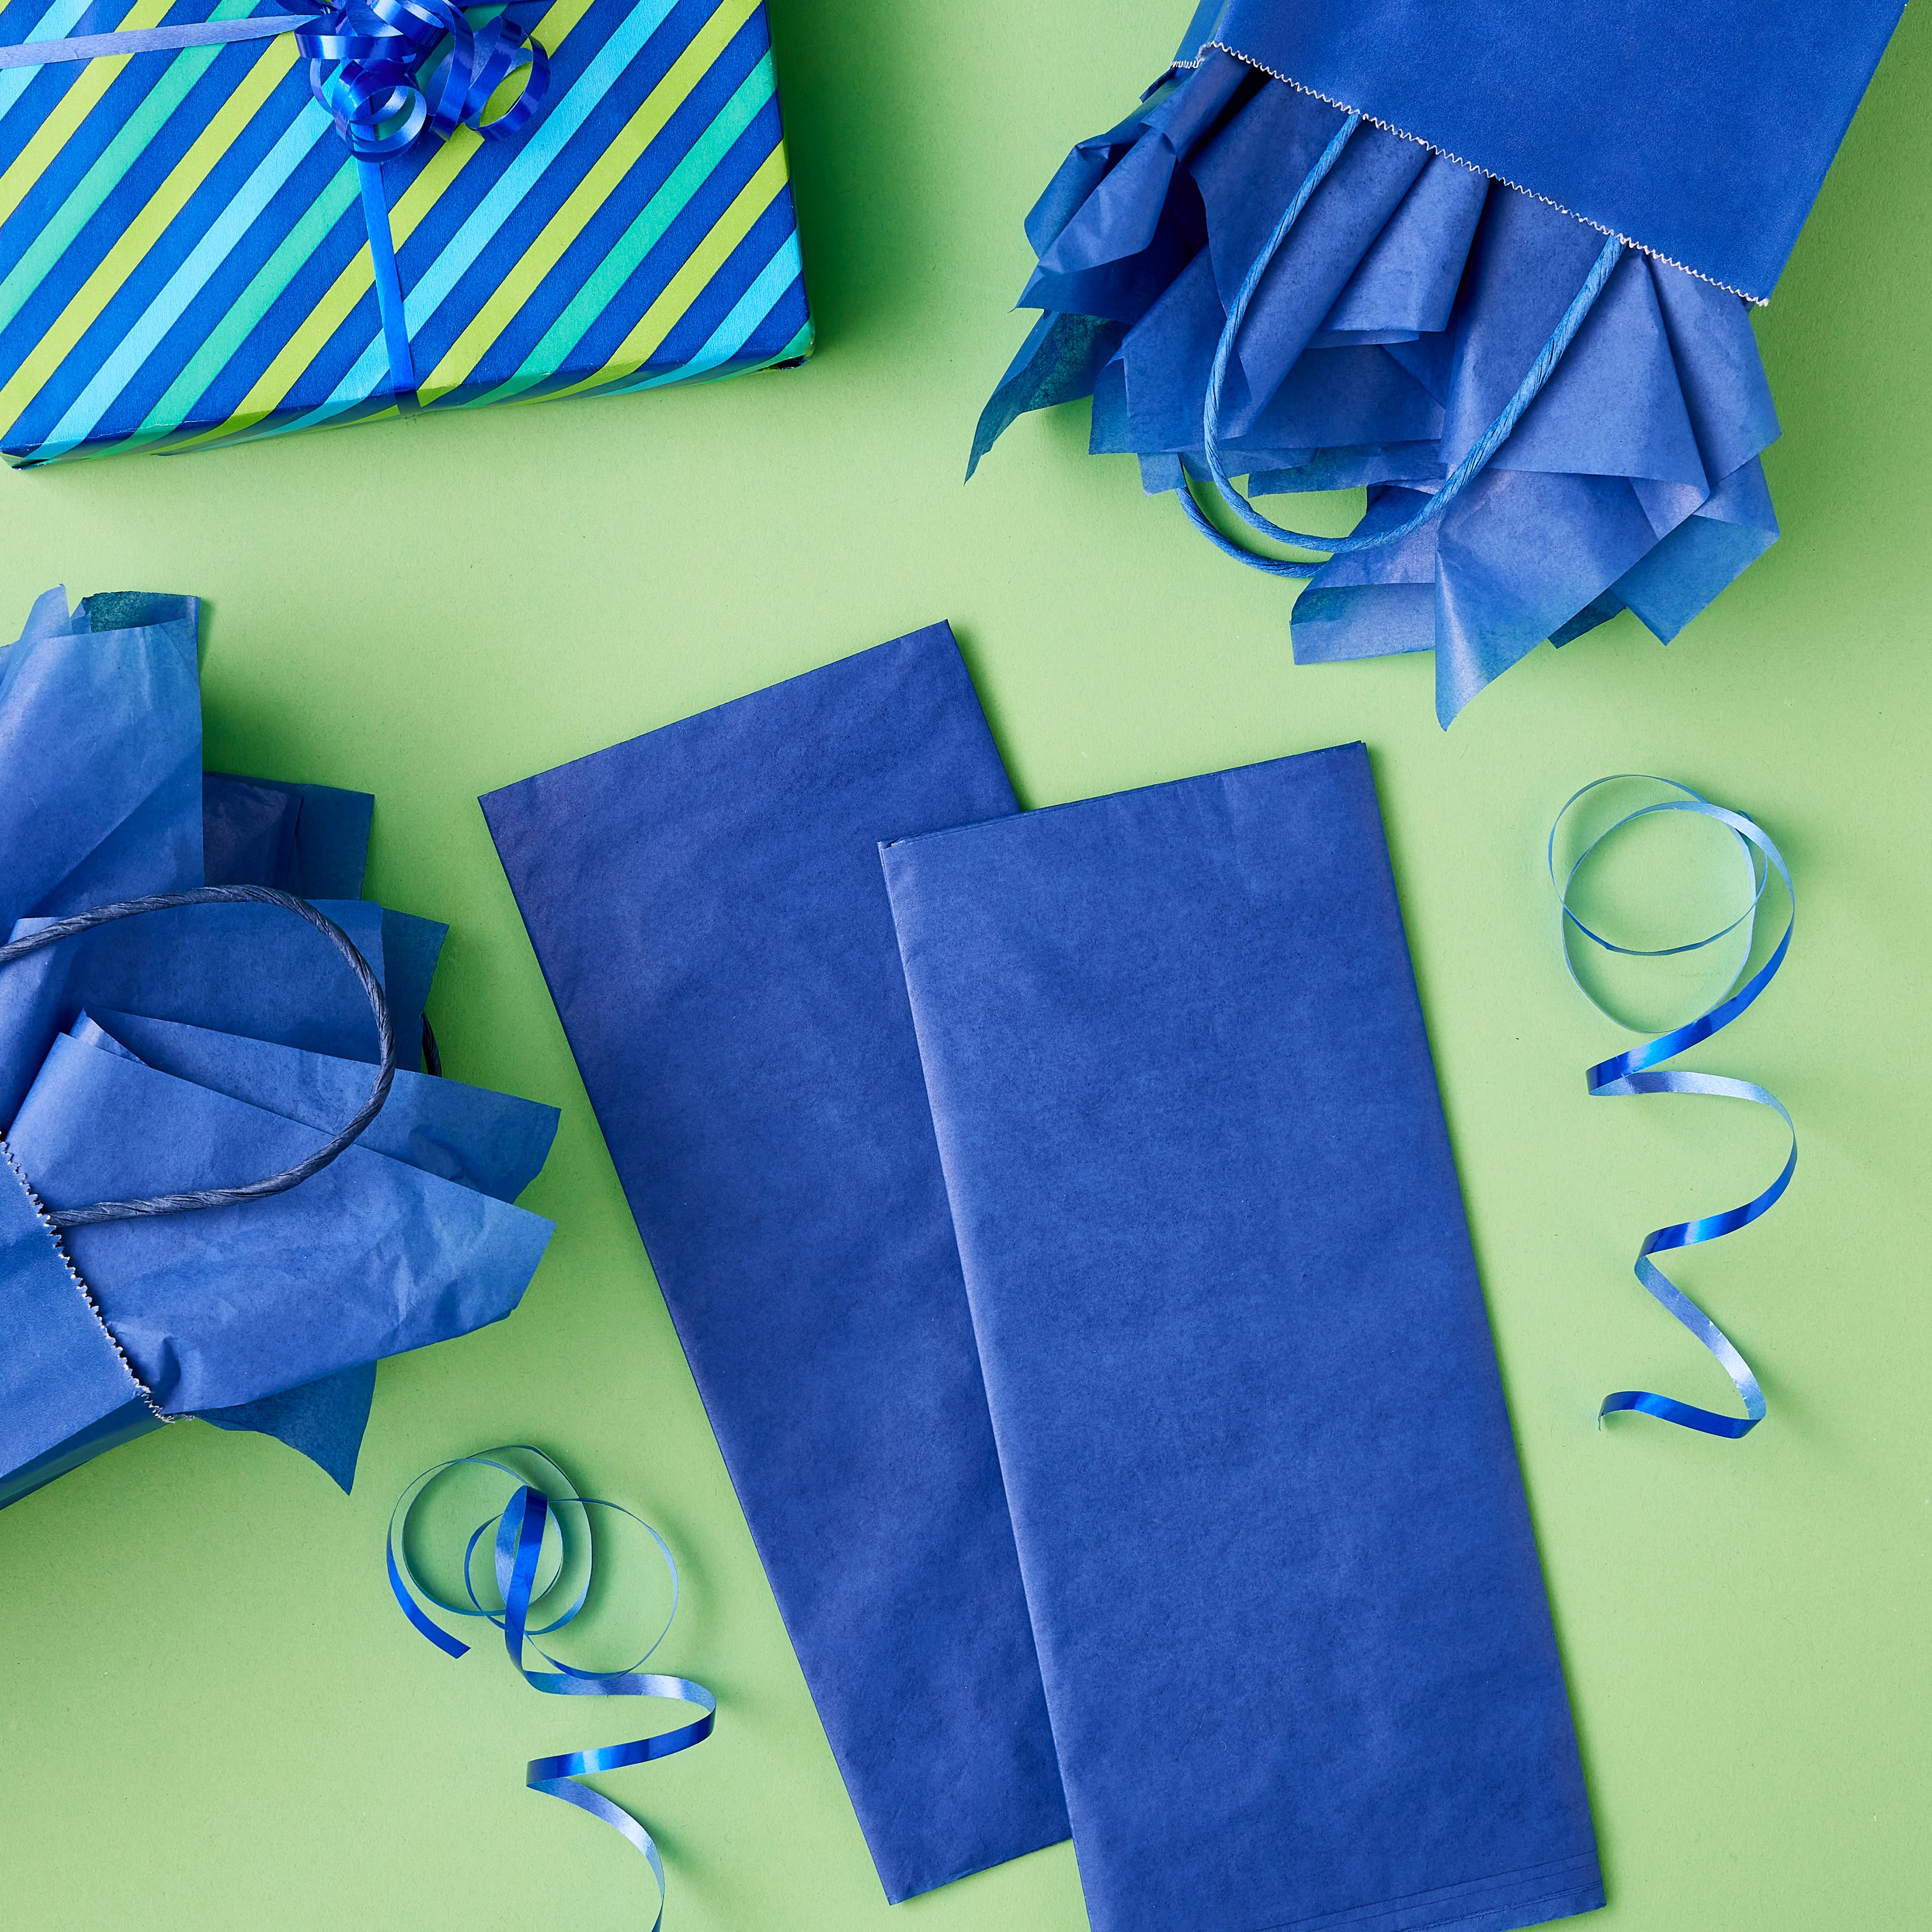 Celebrate It Navy Blue Tissue Paper - 12 ct